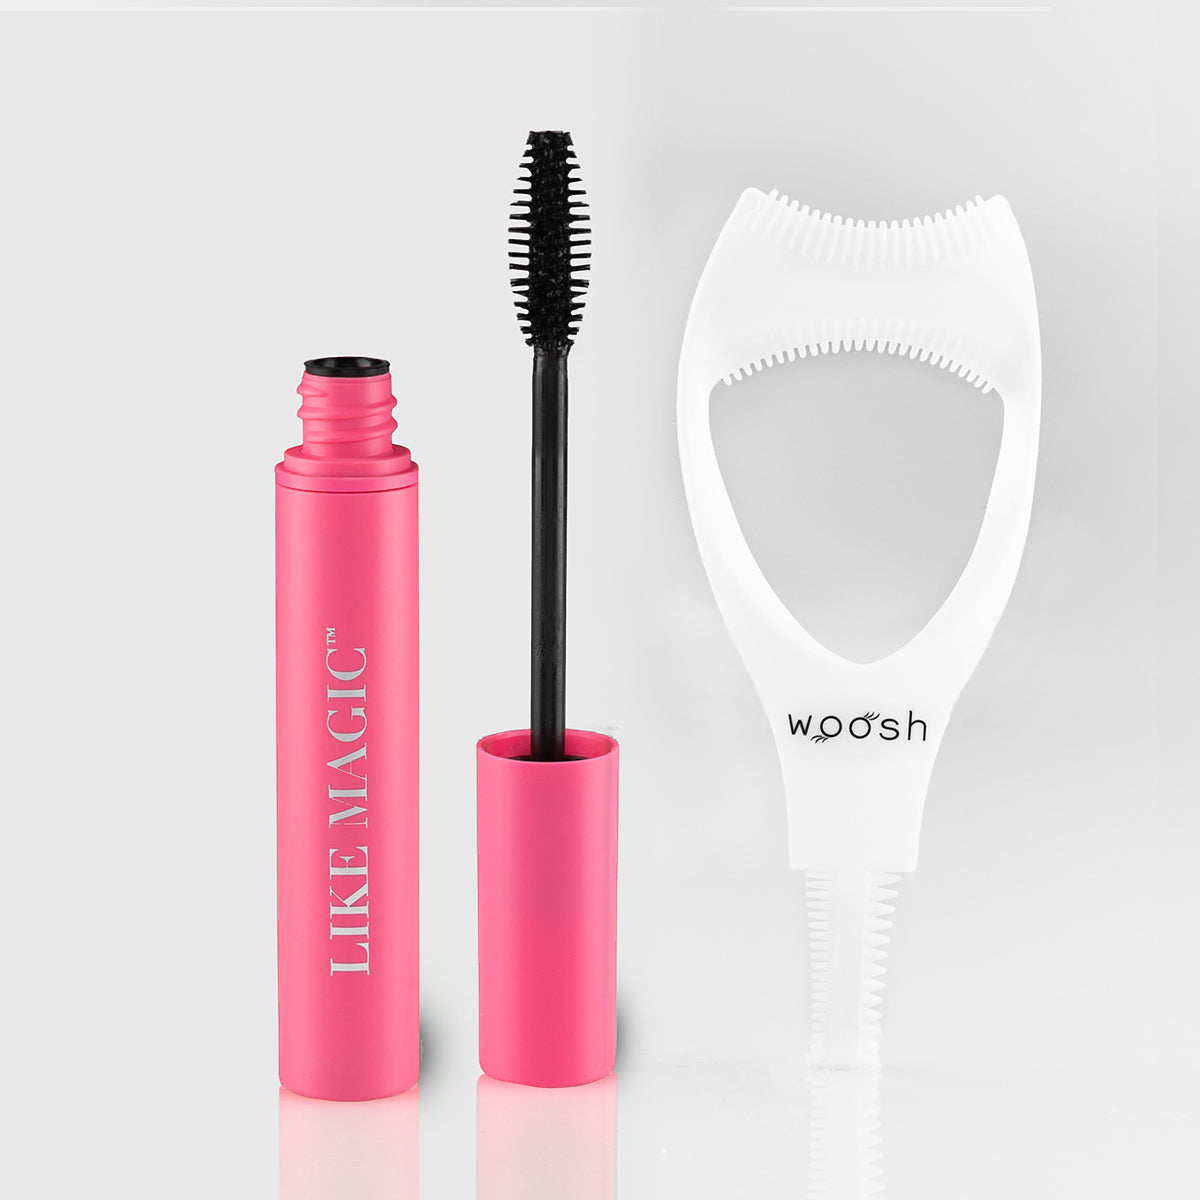 Open pink tube of Like Magic mascara showing almond shaped wand and bristles, next to a white mascara shield.